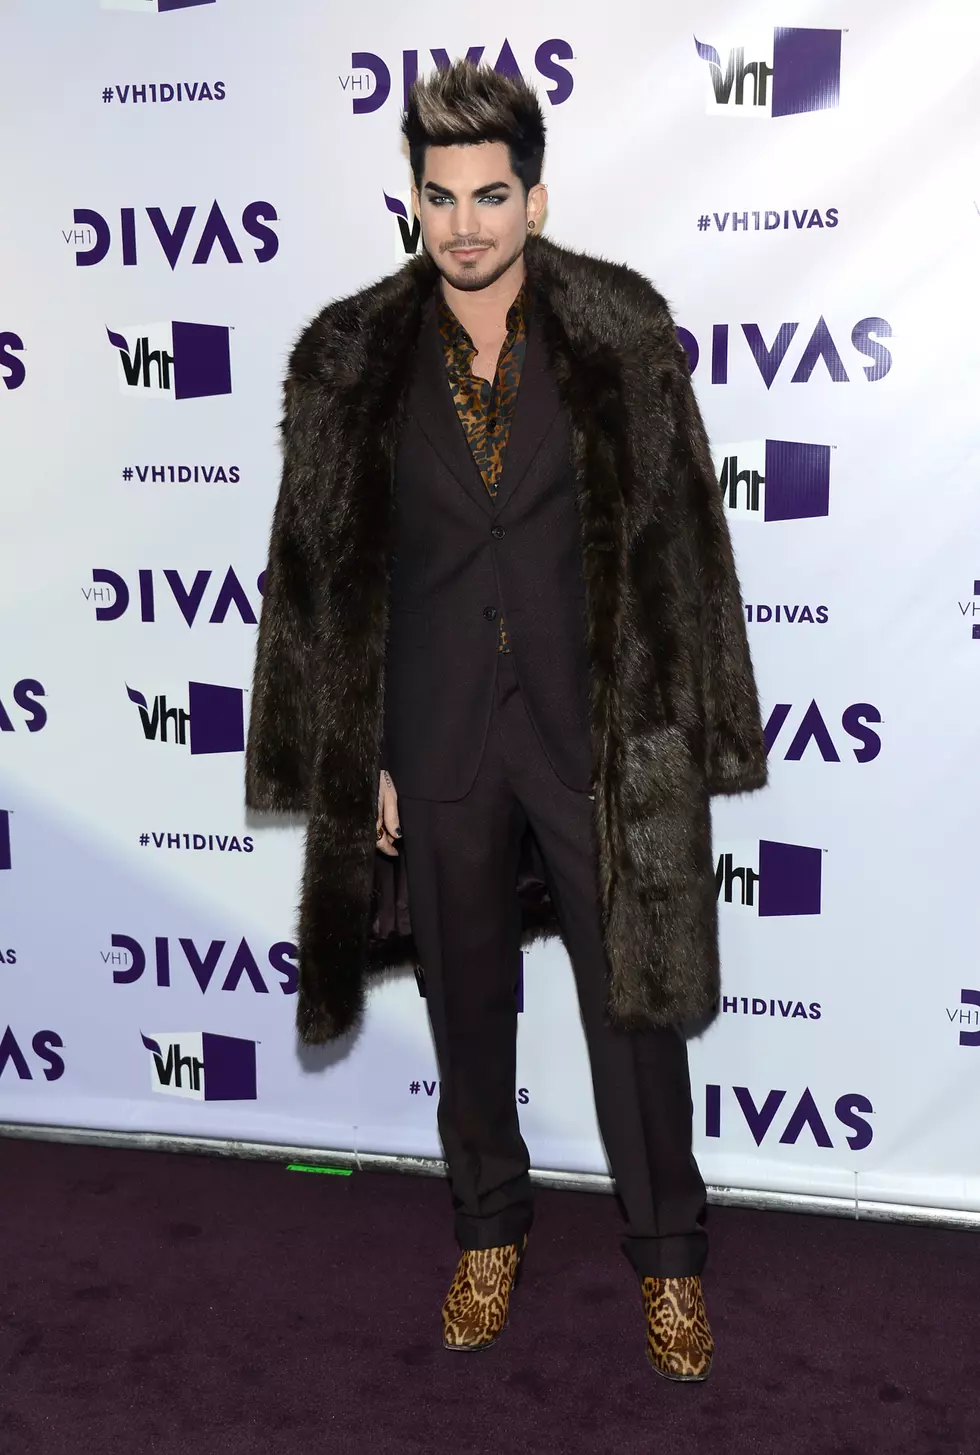 Adam Lambert's Hottest Red Carpet Photos